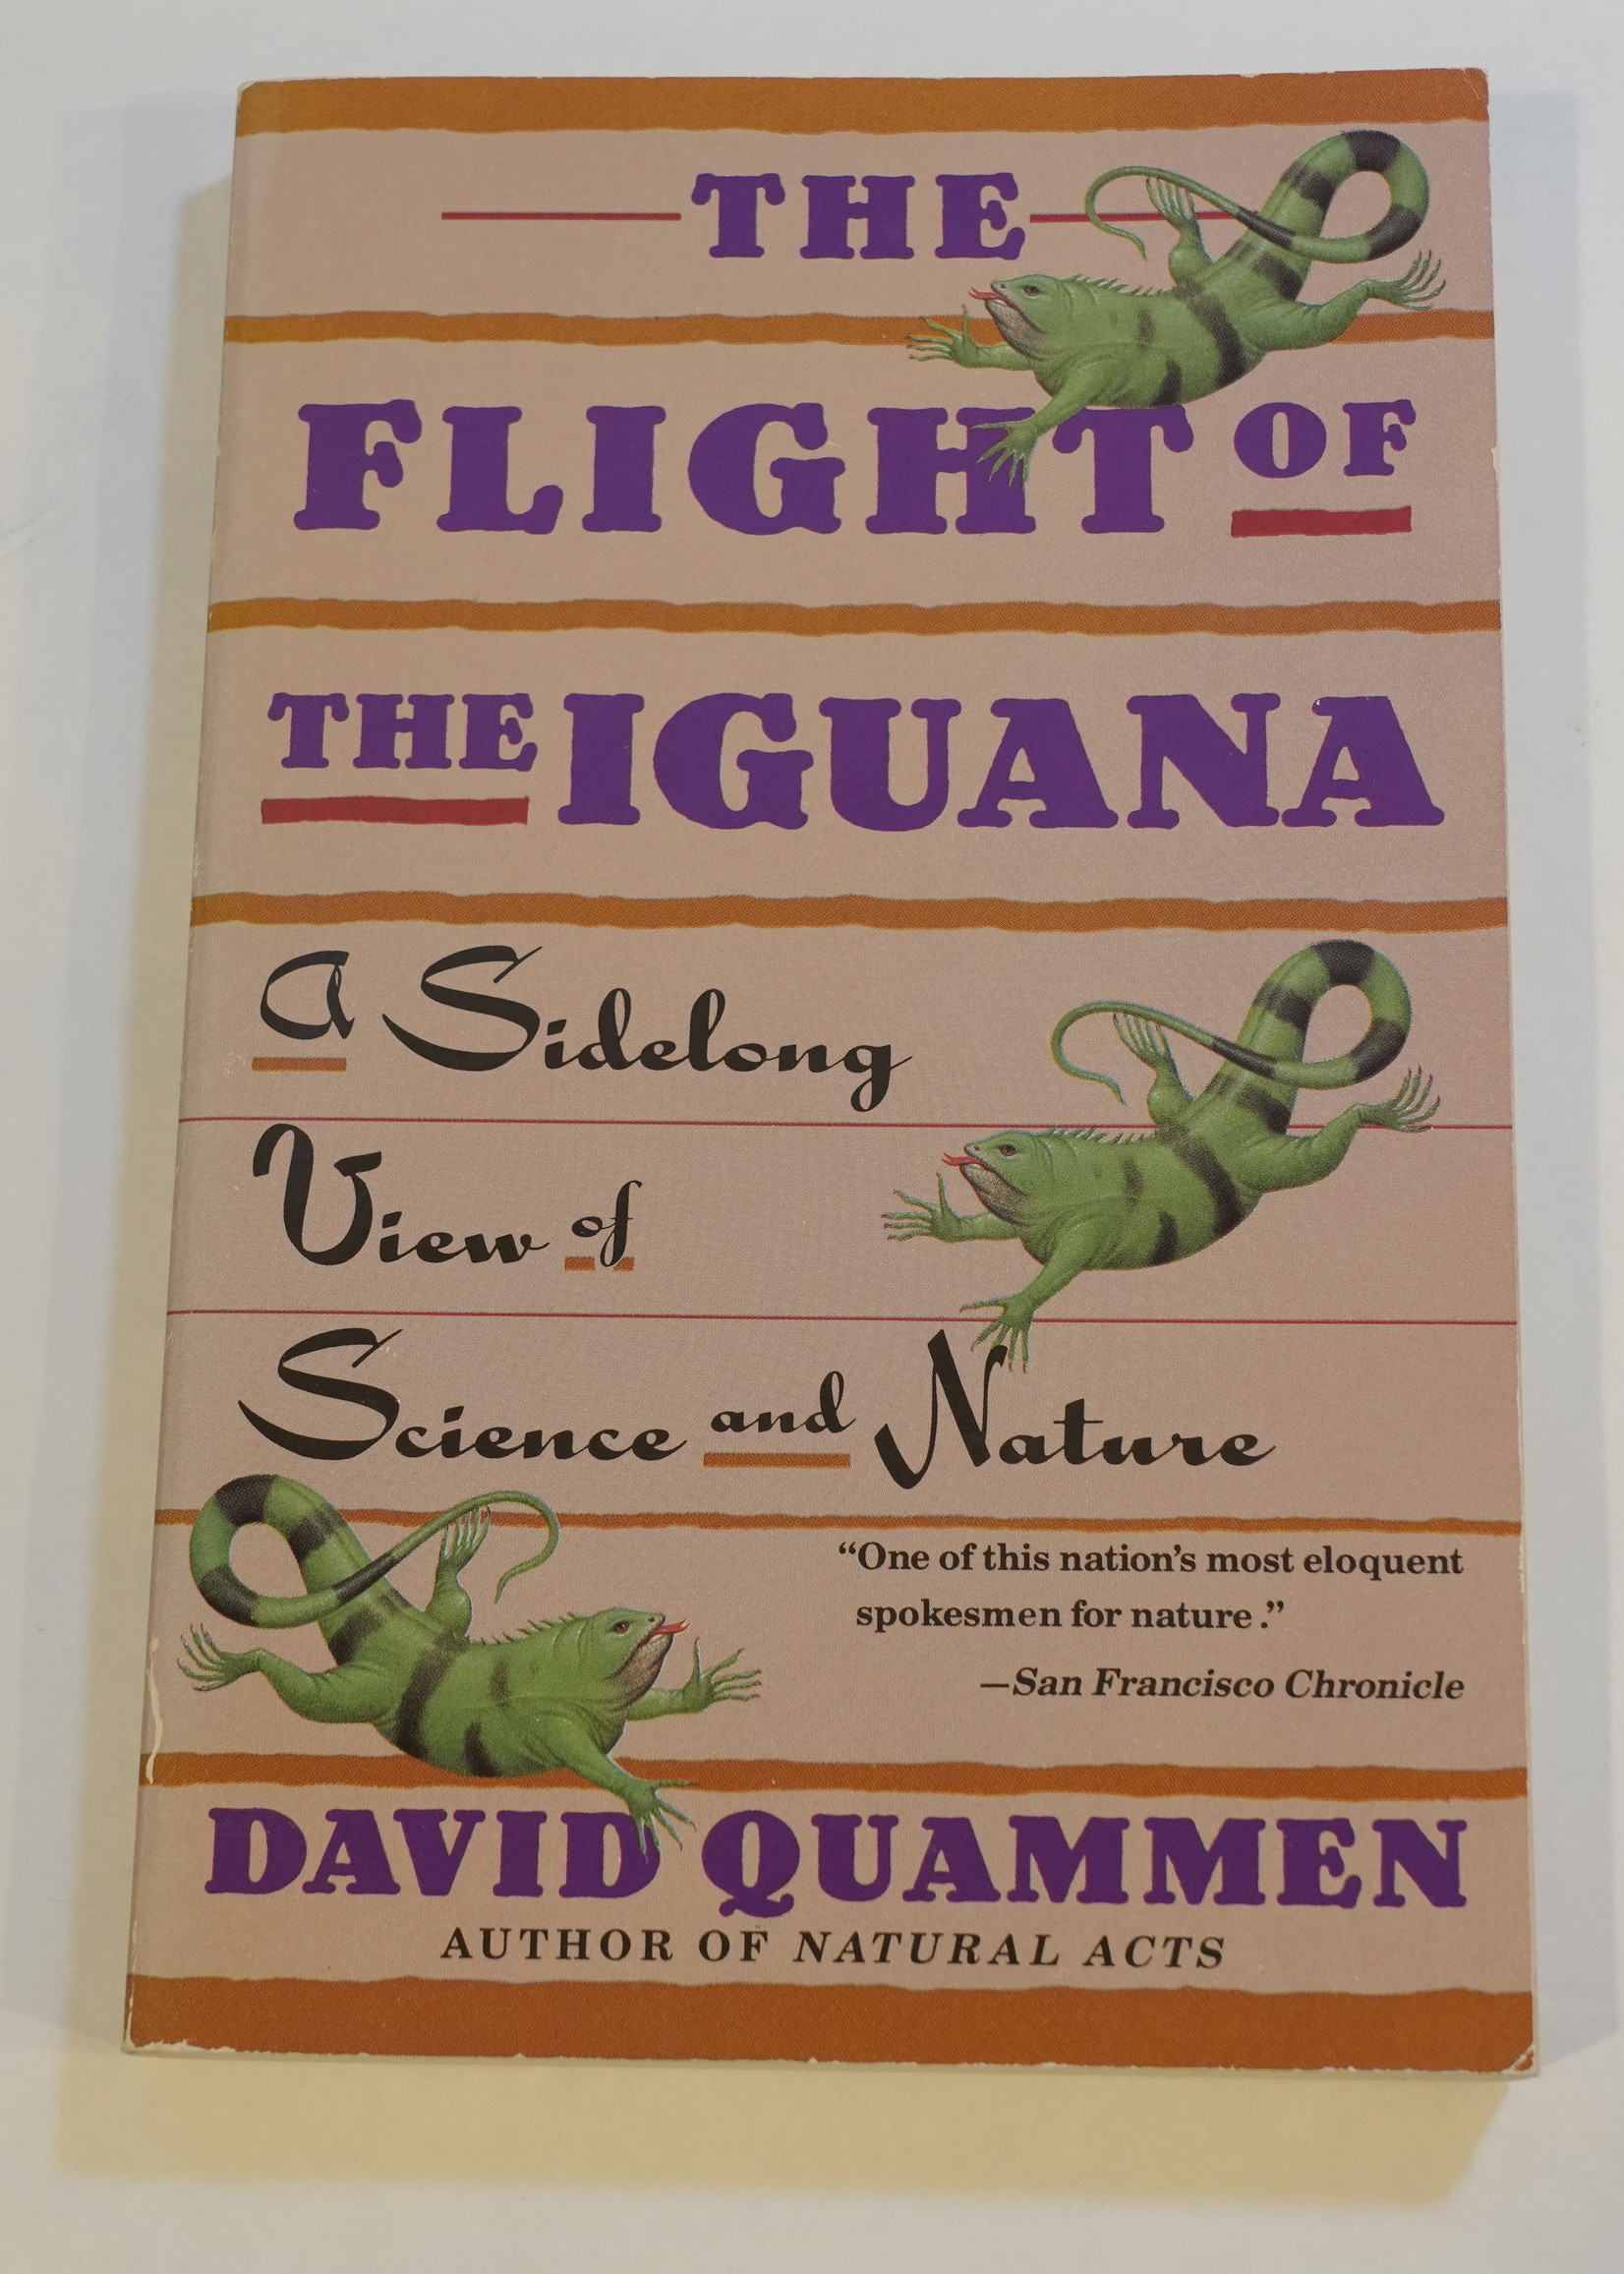 The Flight of the Iguana